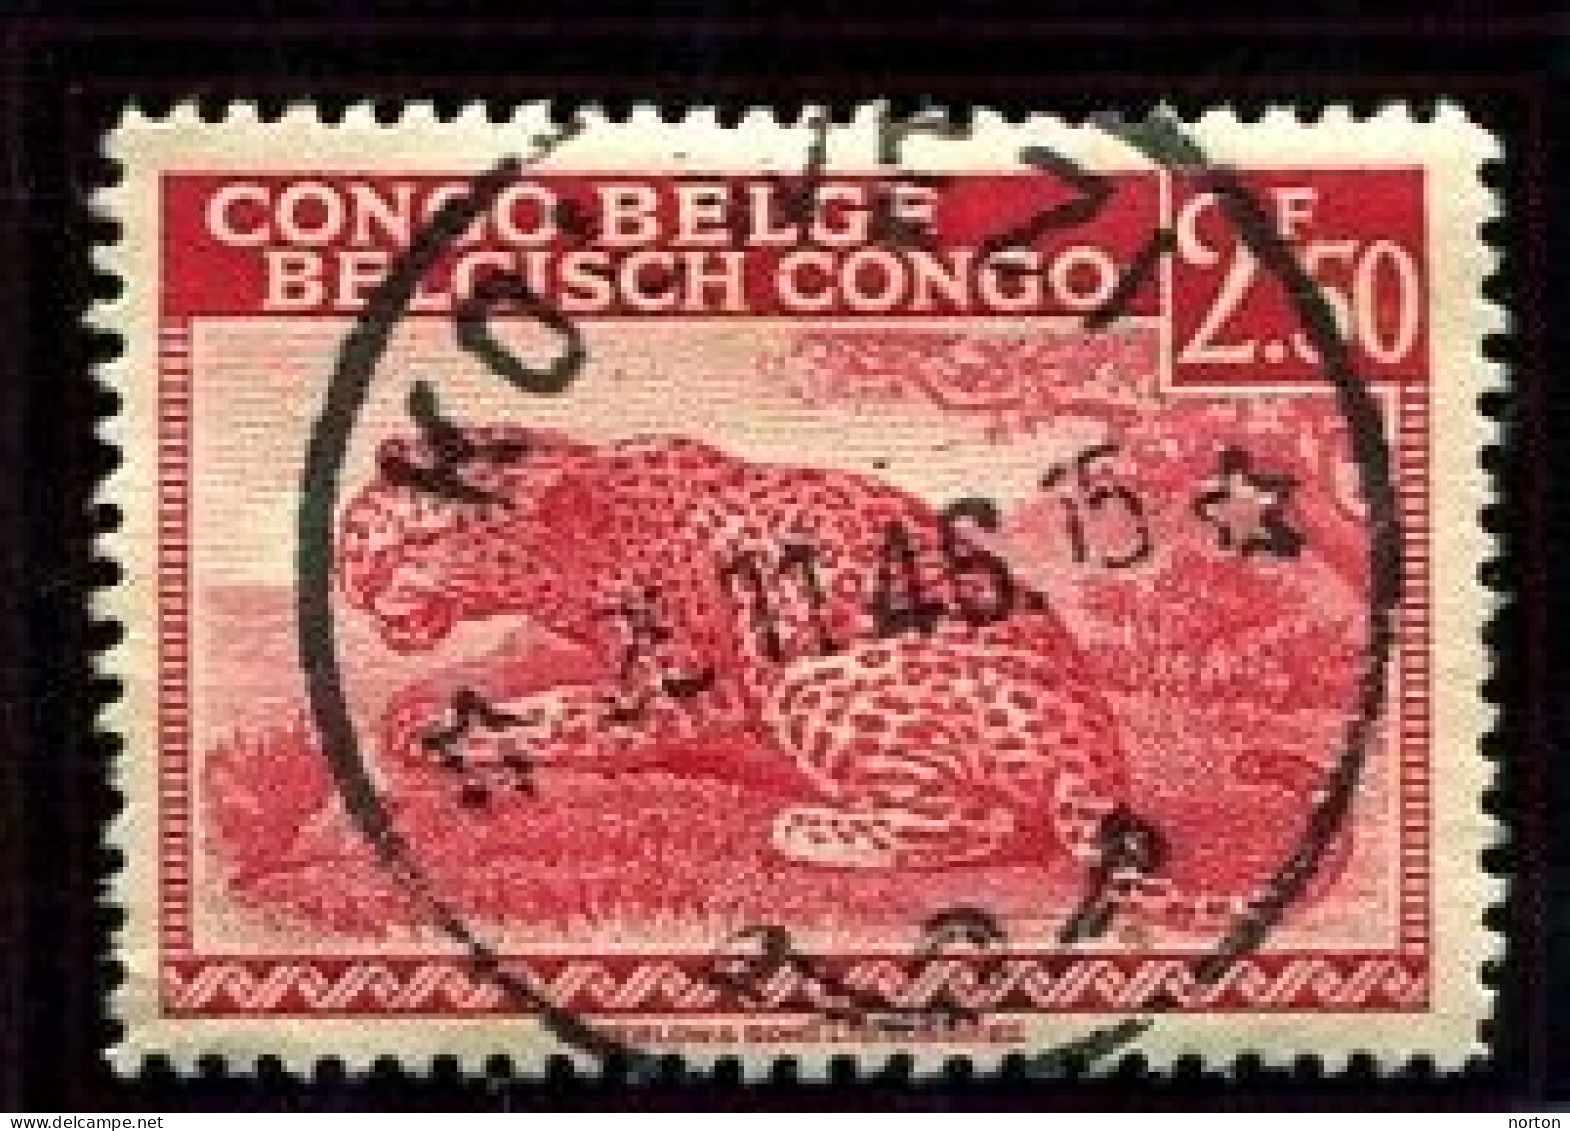 Congo Kolwezi Oblit. Keach 8A1 Sur C.O.B. 261 Le 25/11/1946 - Used Stamps